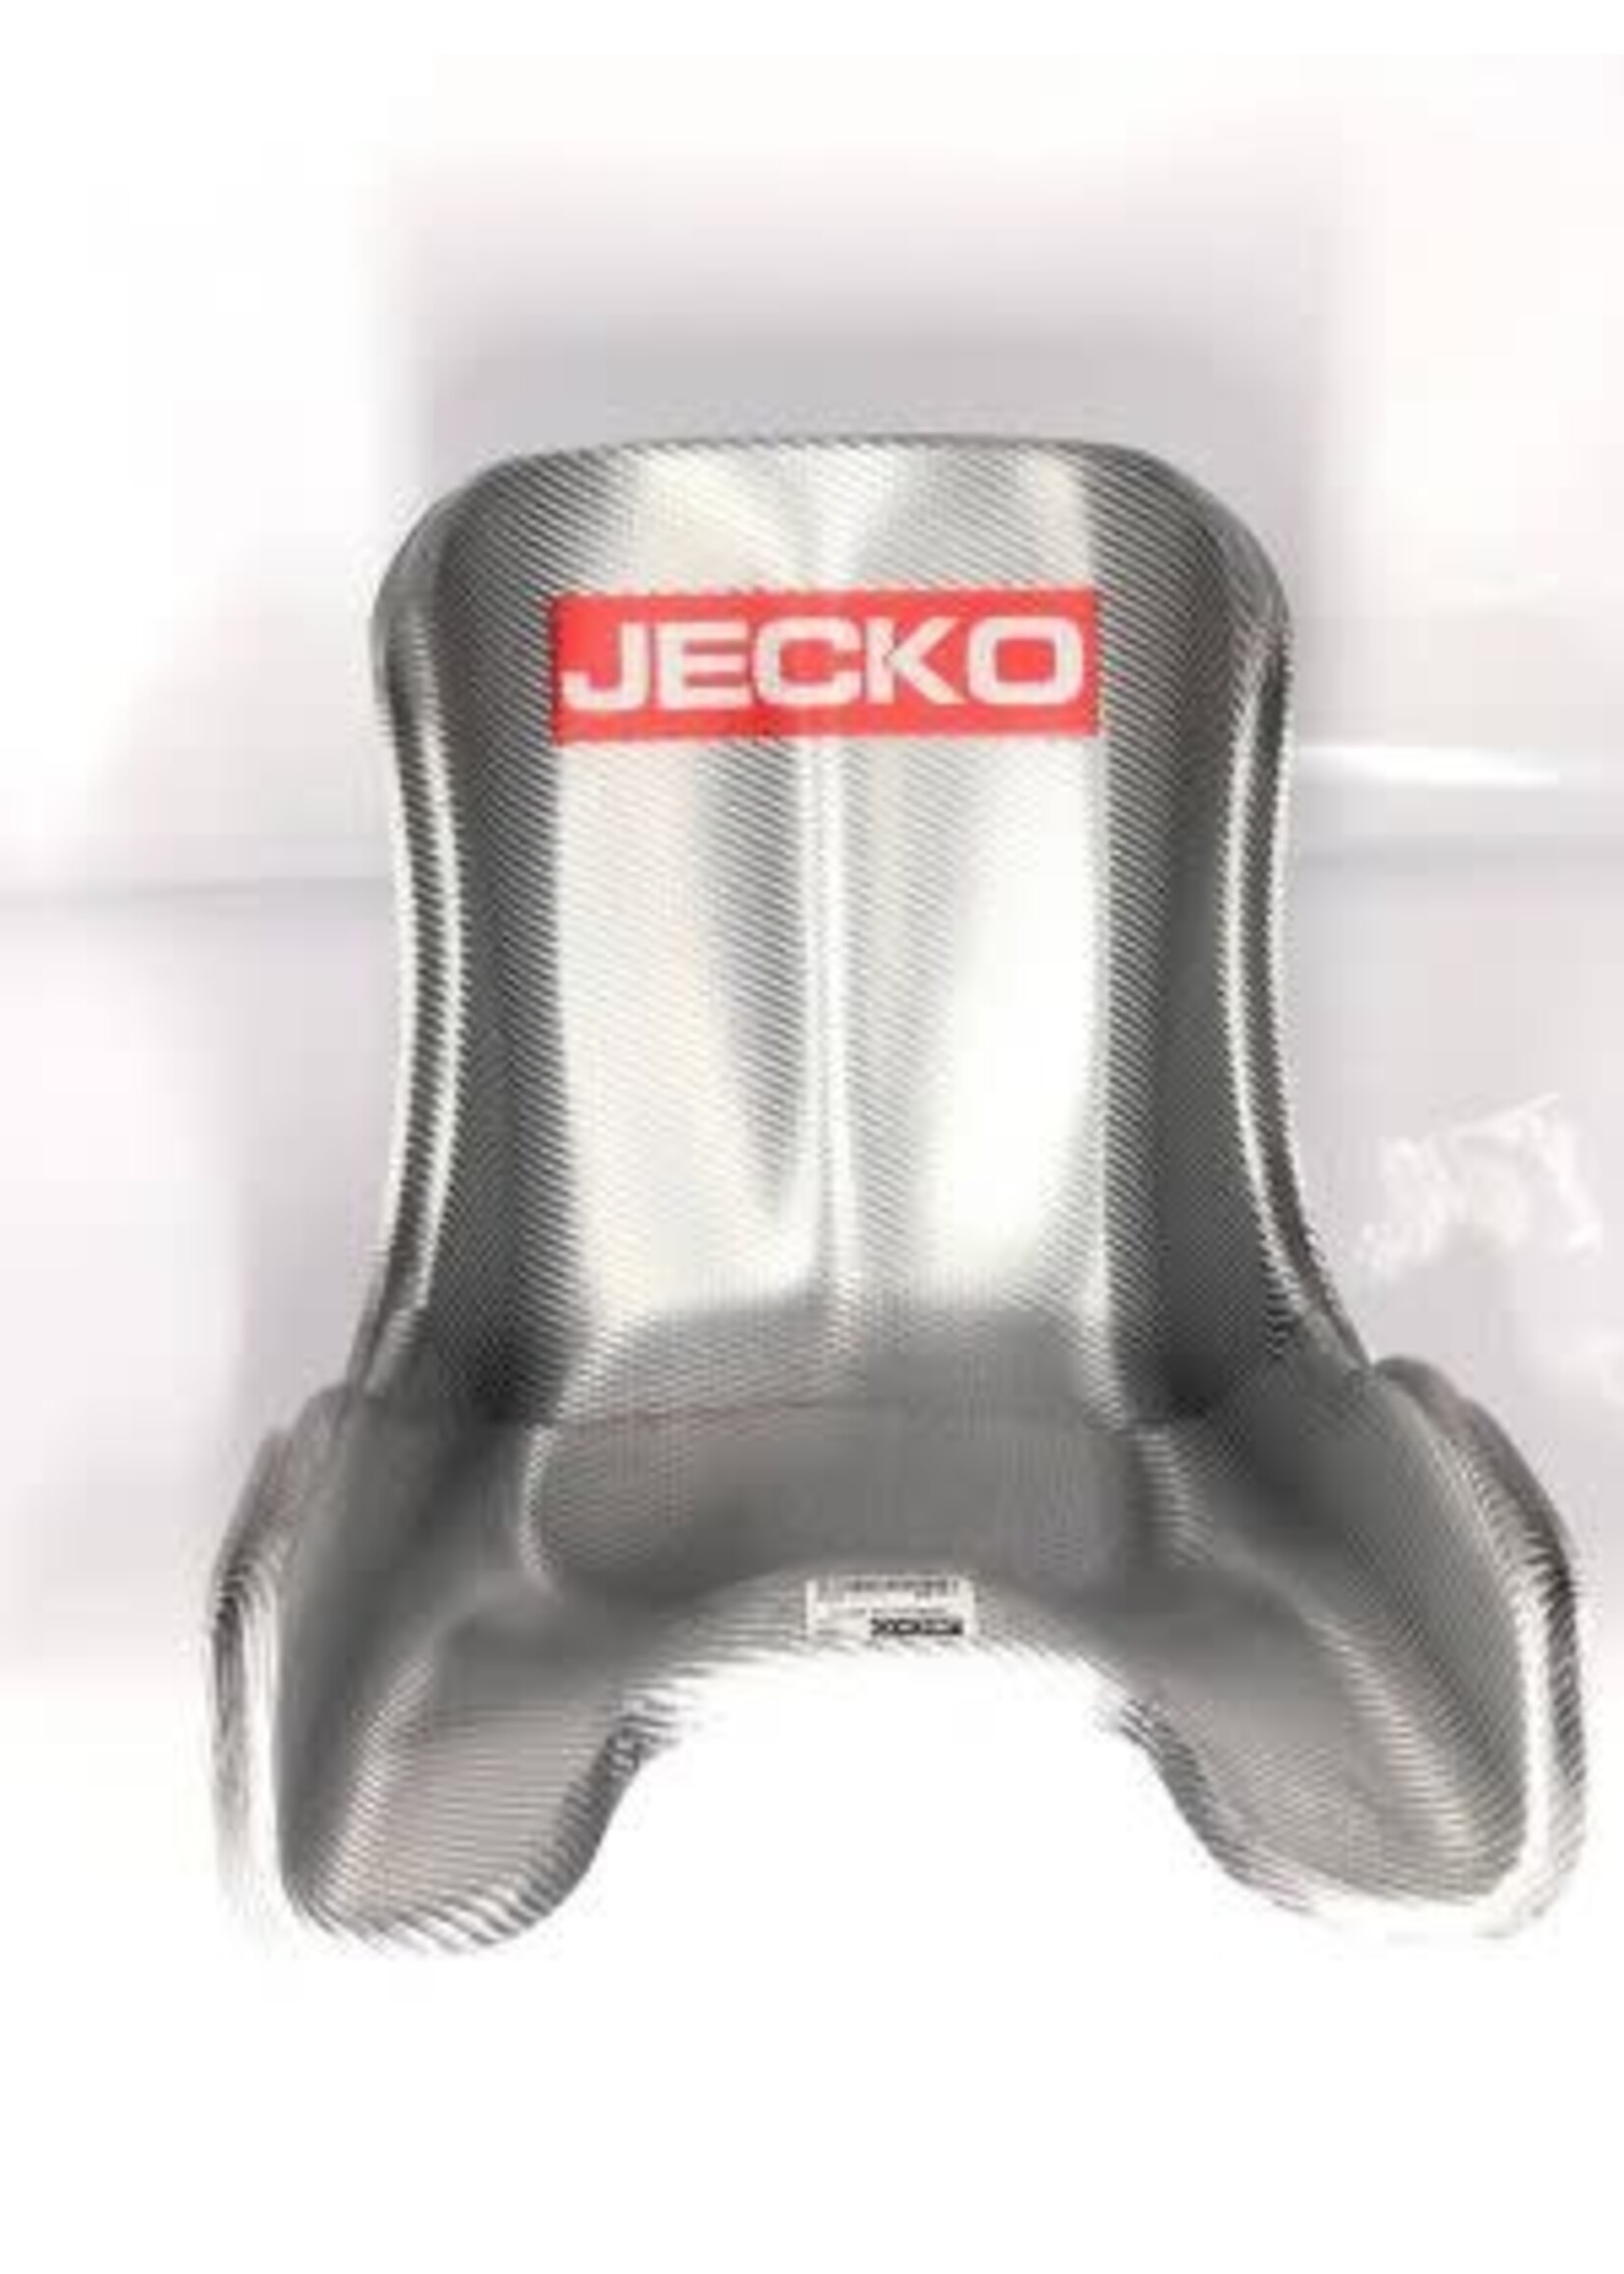 jecko JECKO B Seat